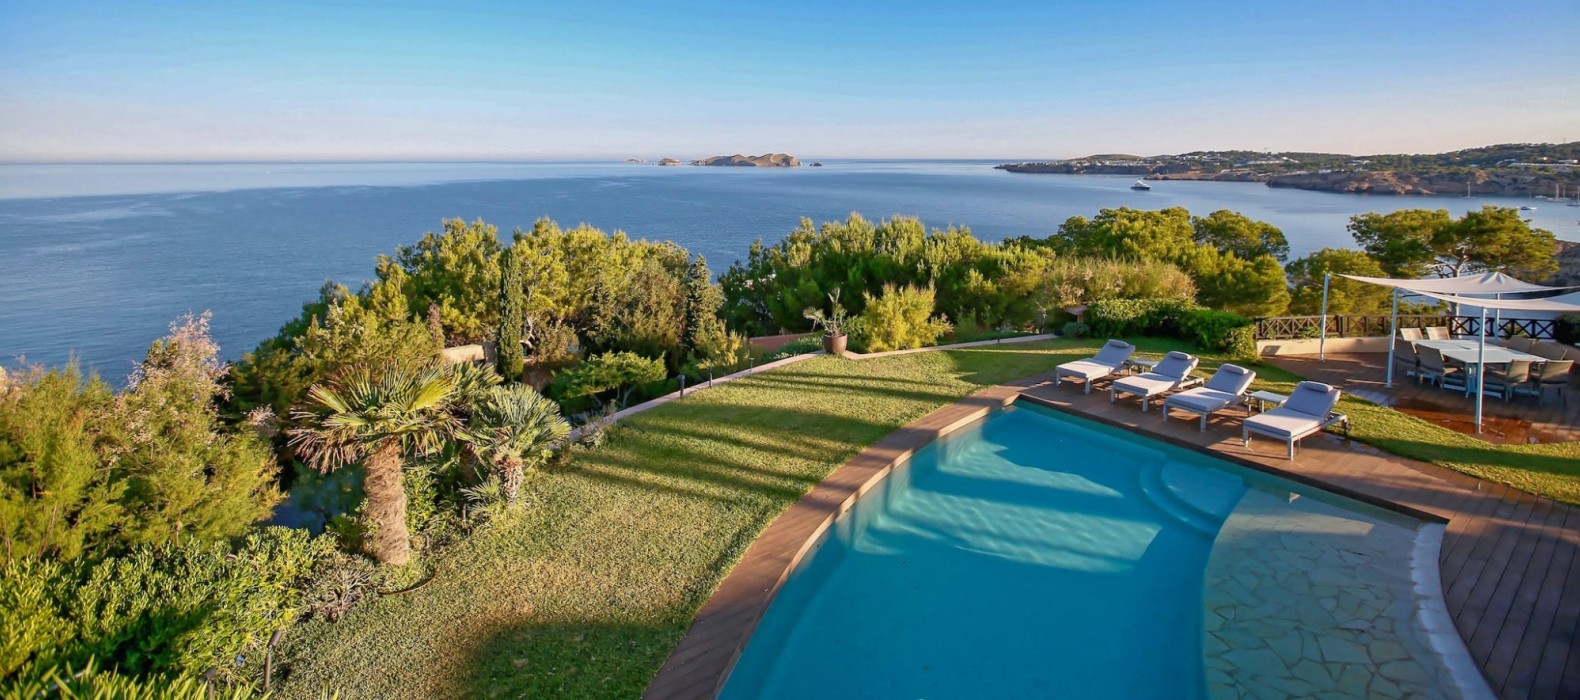 Exterior pool view of Villa Fairy Tale in Ibiza